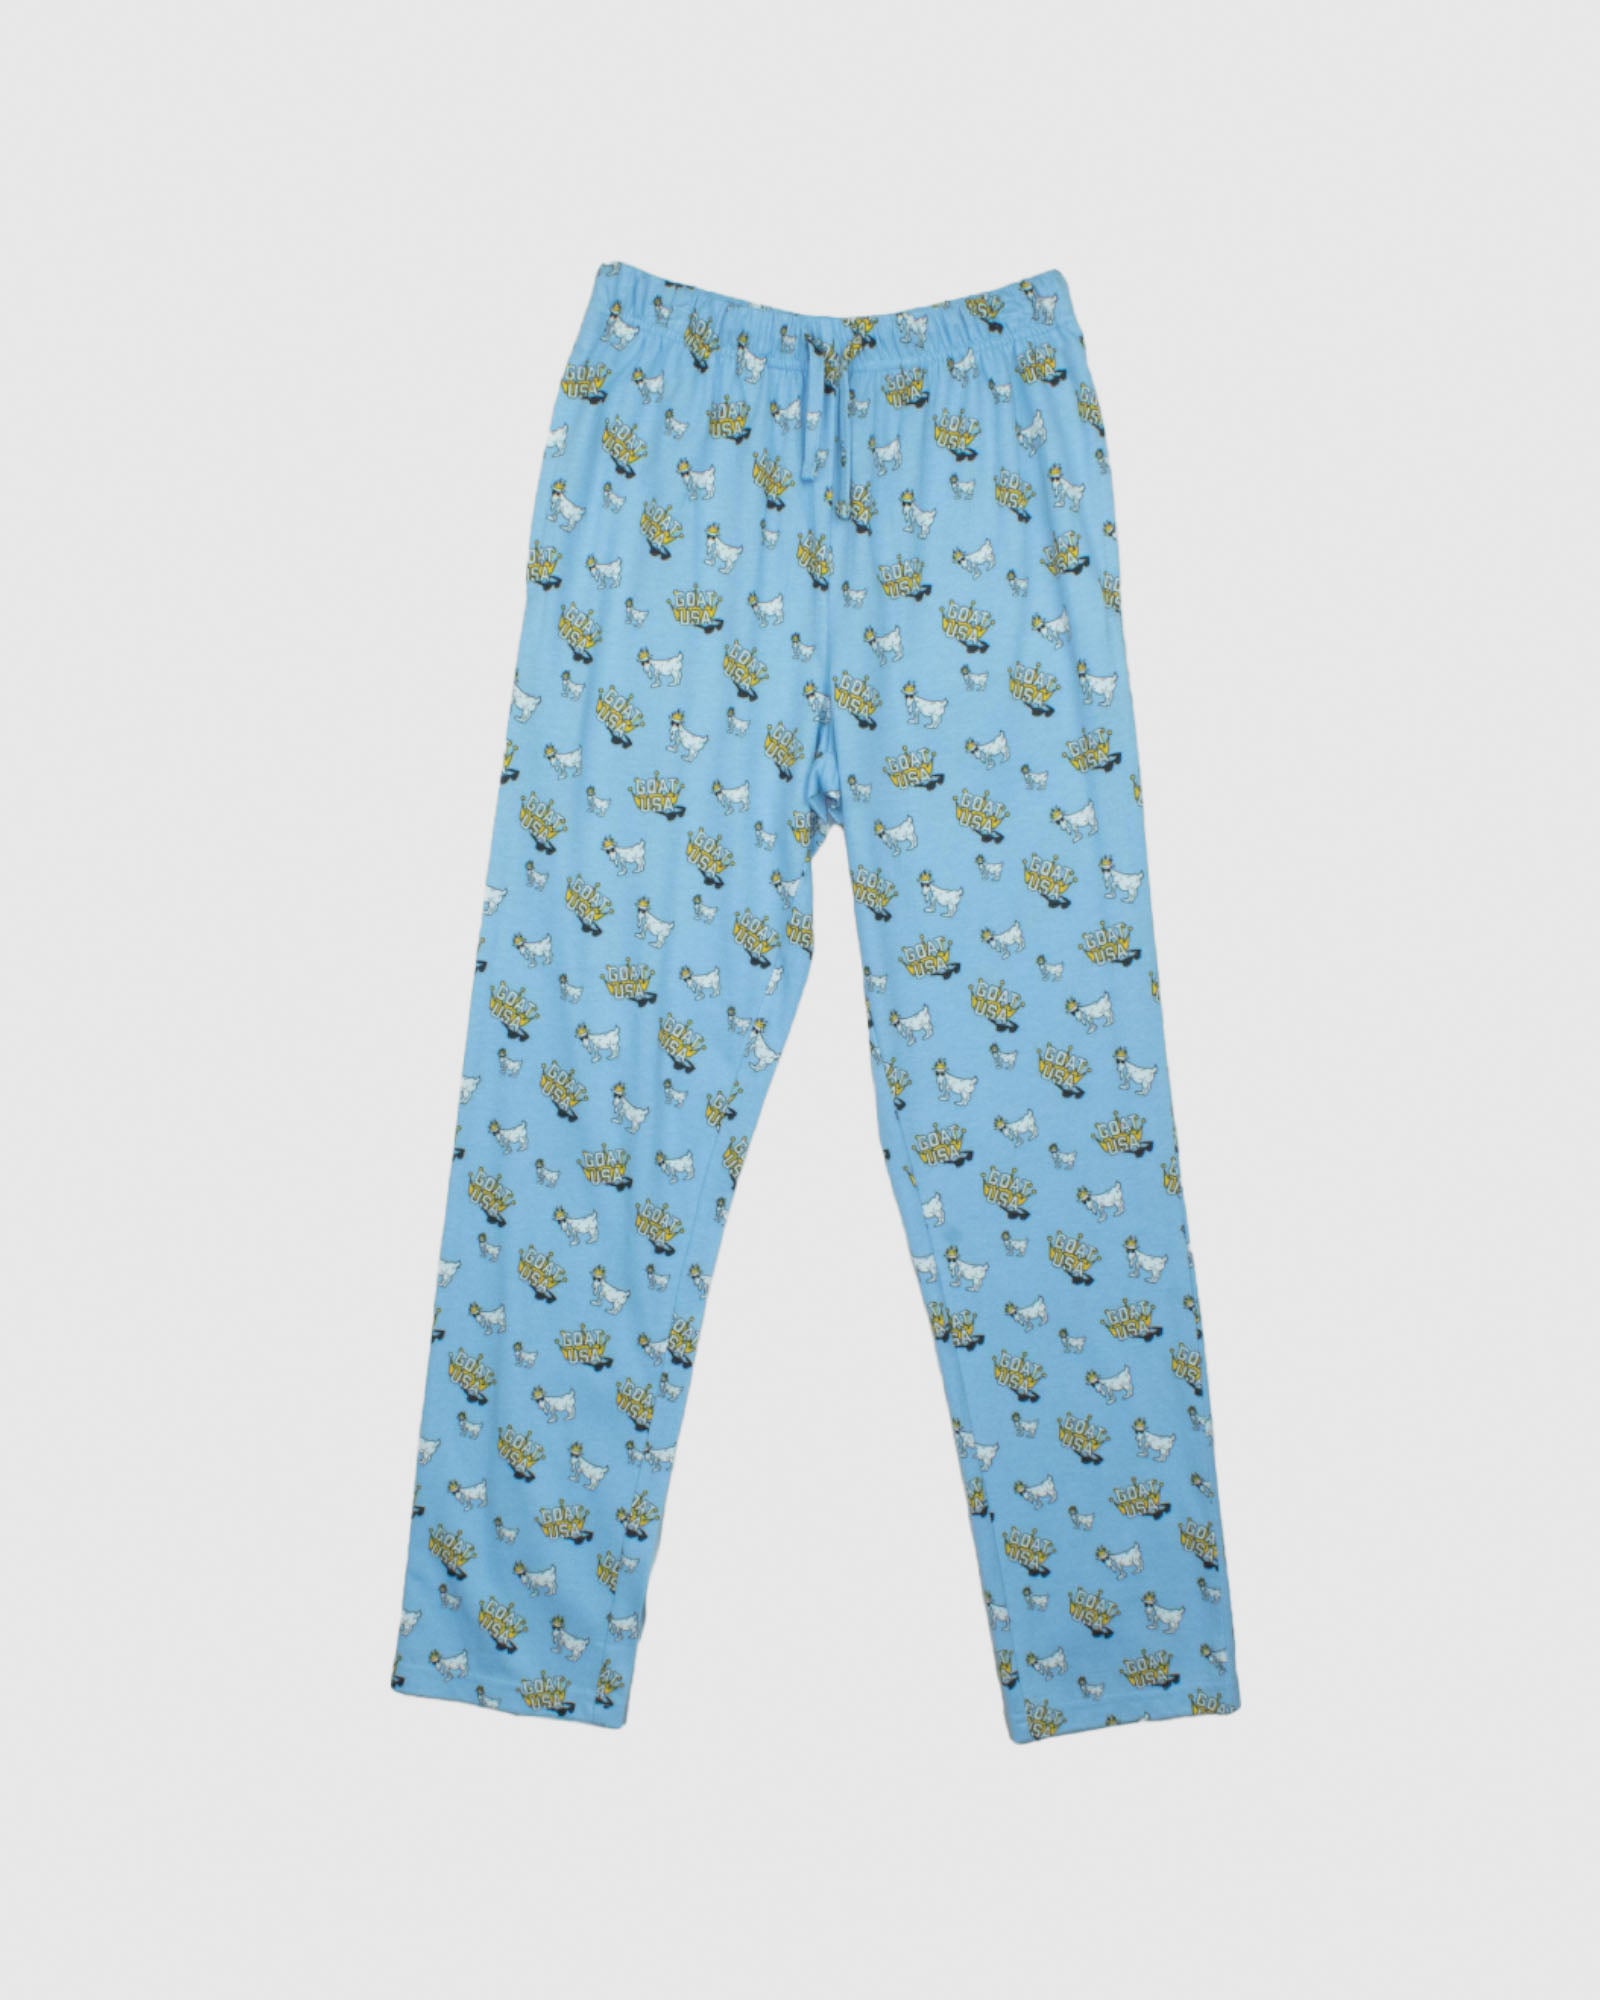 SALE Set of 6 pajama pants | Clothes design, Pajama pants, Fashion tips